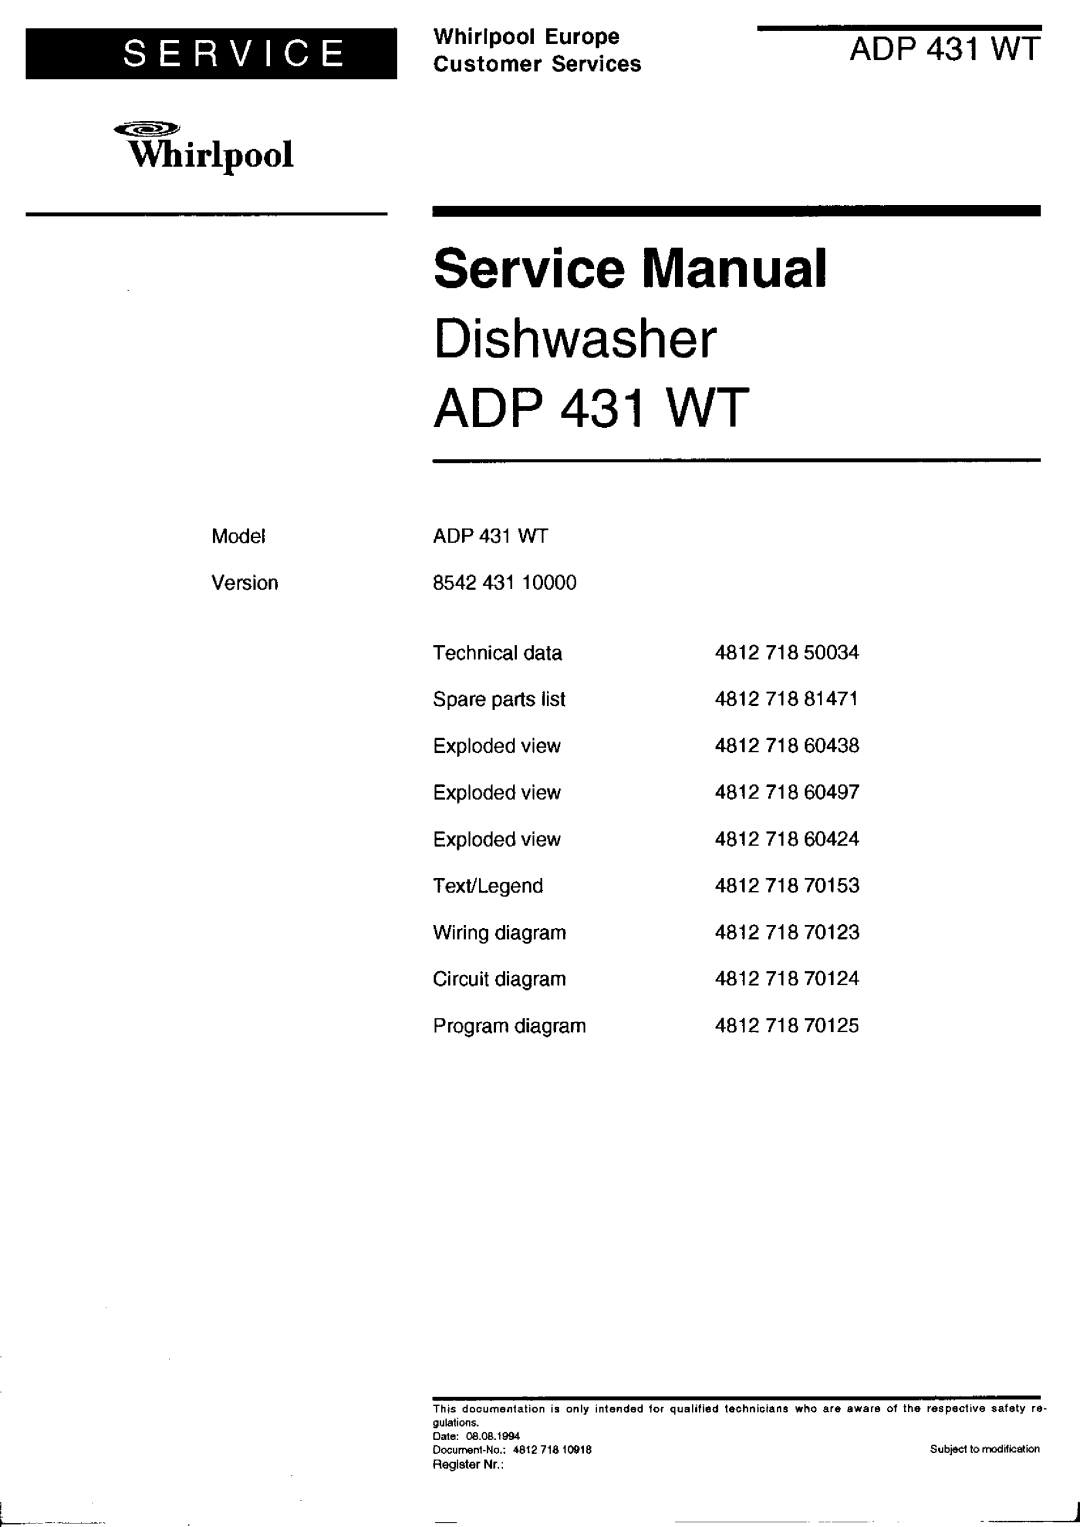 Whirlpool service manual ADP 431 WT, Dishwasher, Whirlpool Euro~e, AD P 431 WT, aJ ~,~, Customer Services, ra1 = 